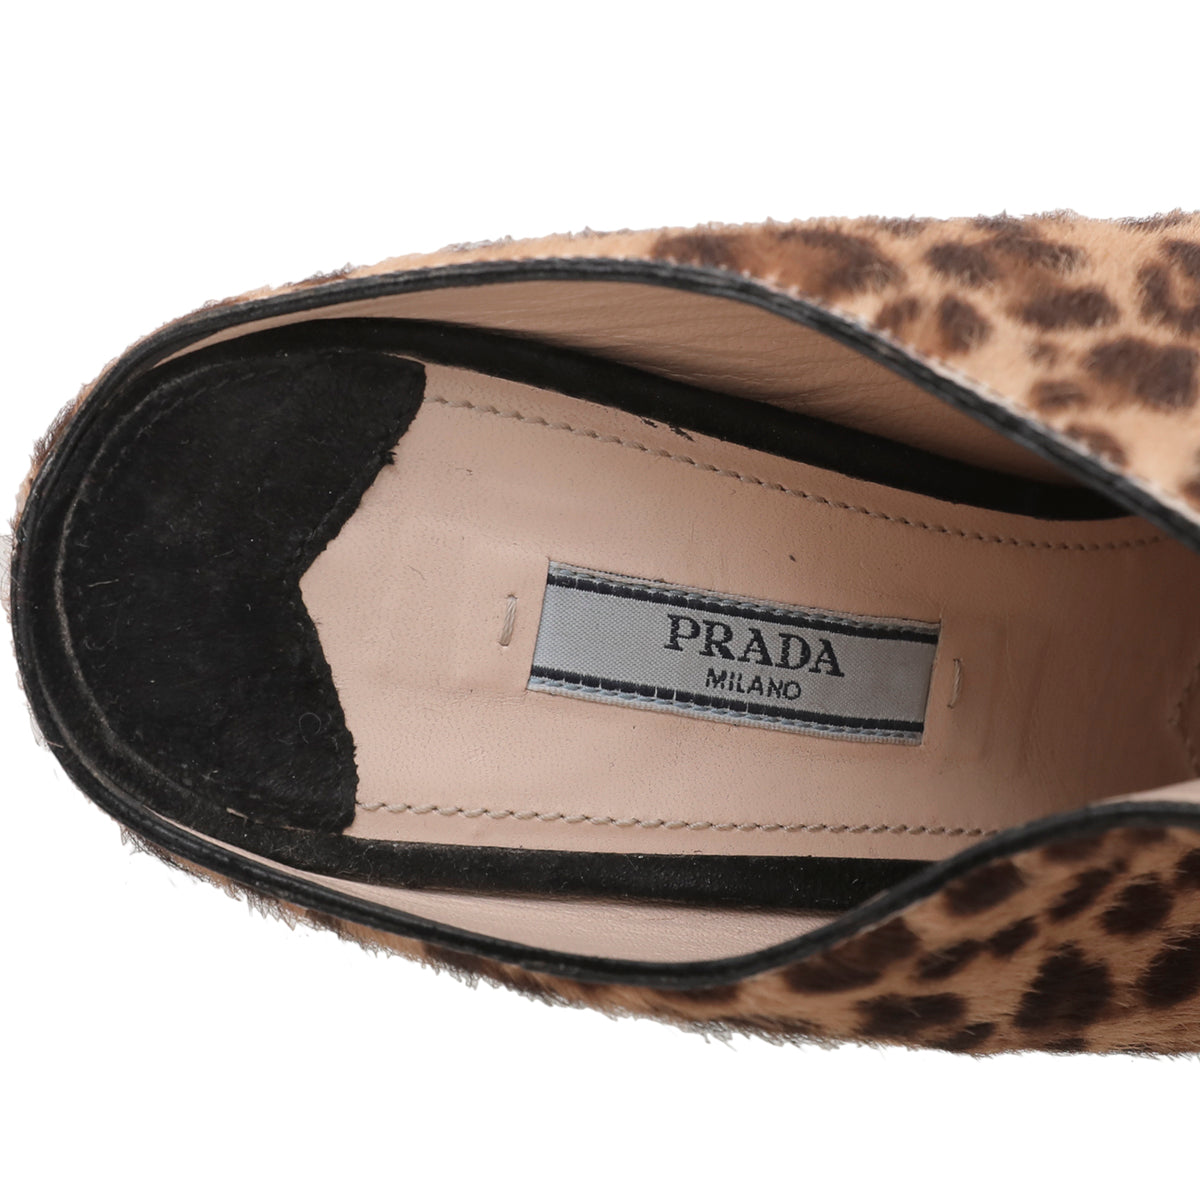 Prada Leopard Print Combo Wedge Slide Sandals 38.5